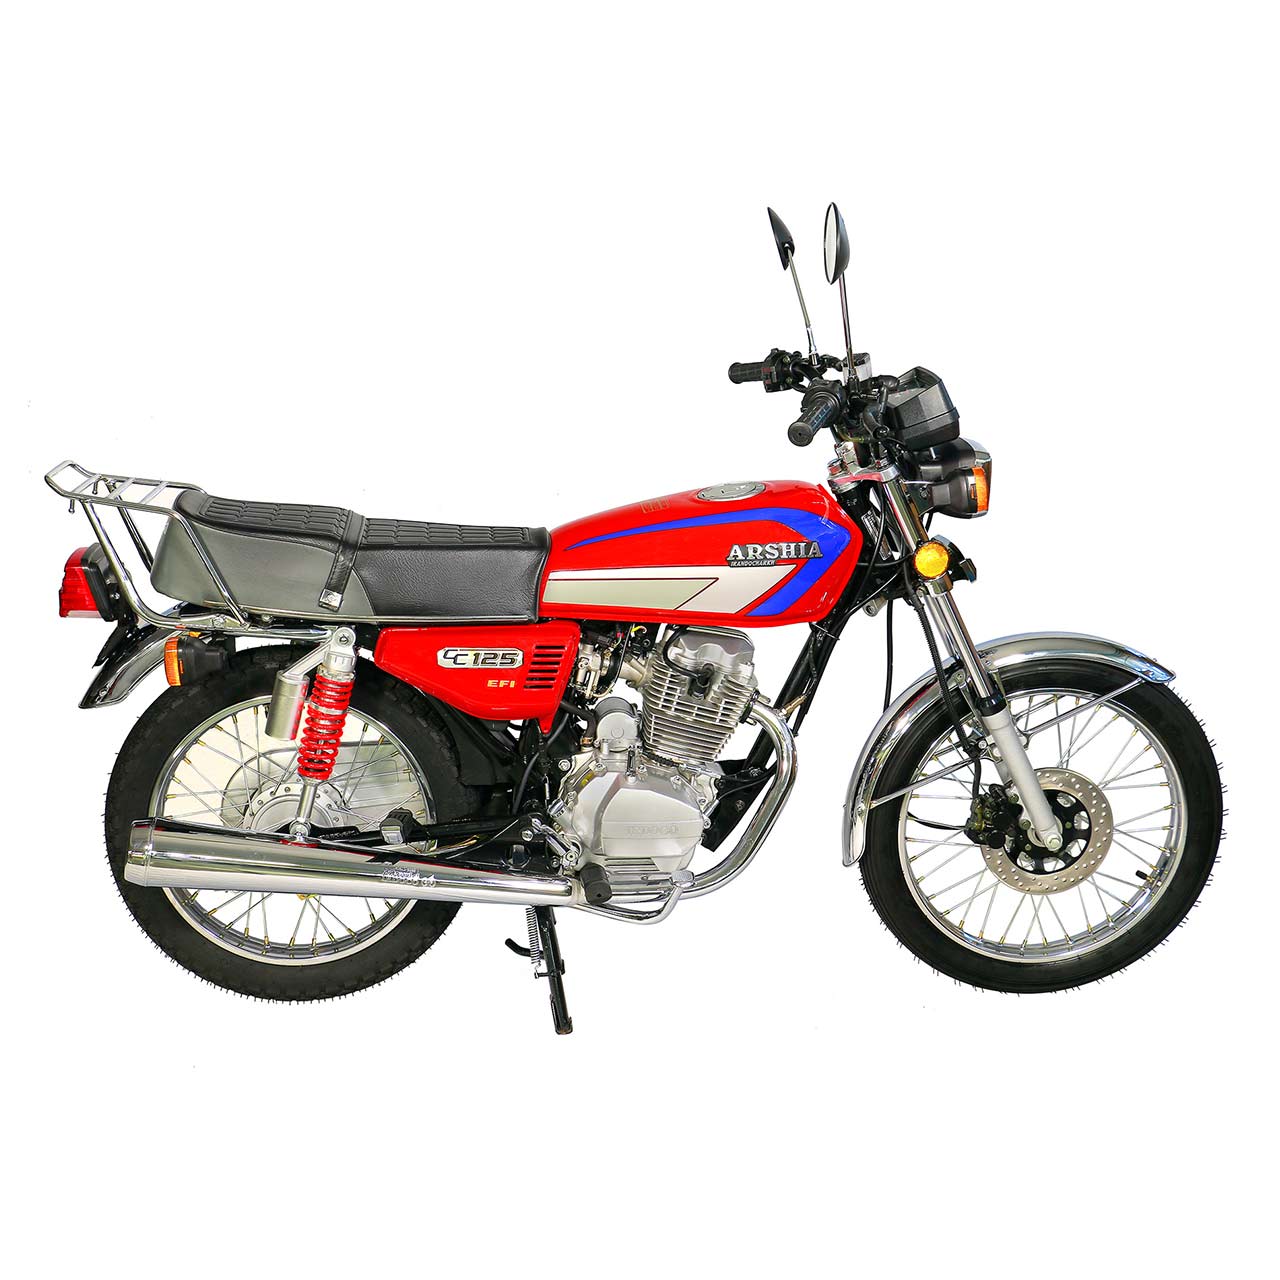 موتورسیکلت ارشیا مدل EF1 سال 97